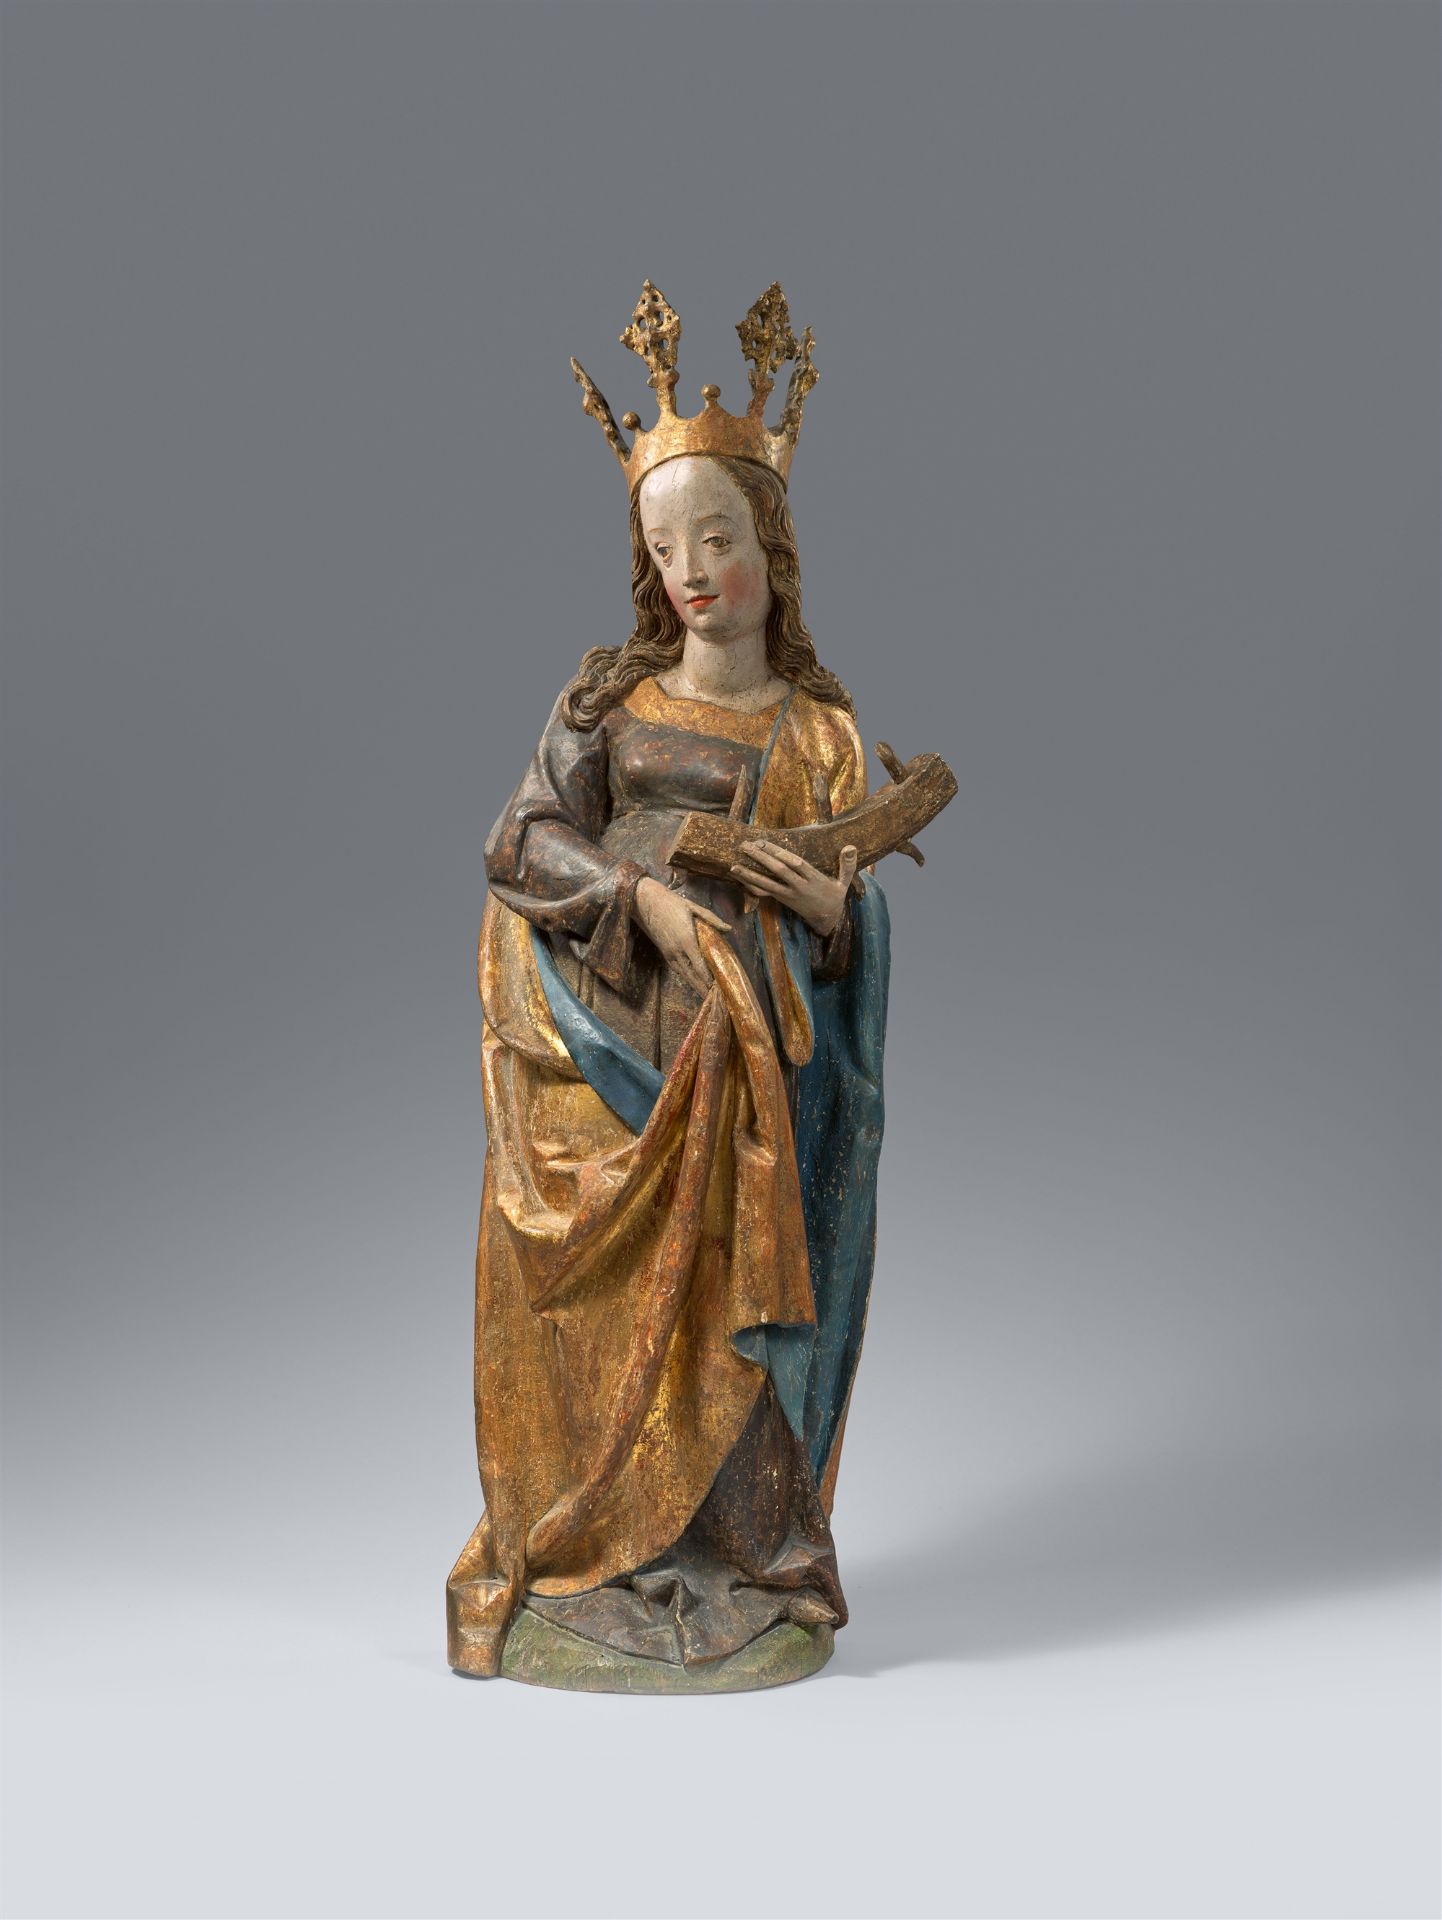 A Bavarian carved wood figure of Saint Catherine, around 1515